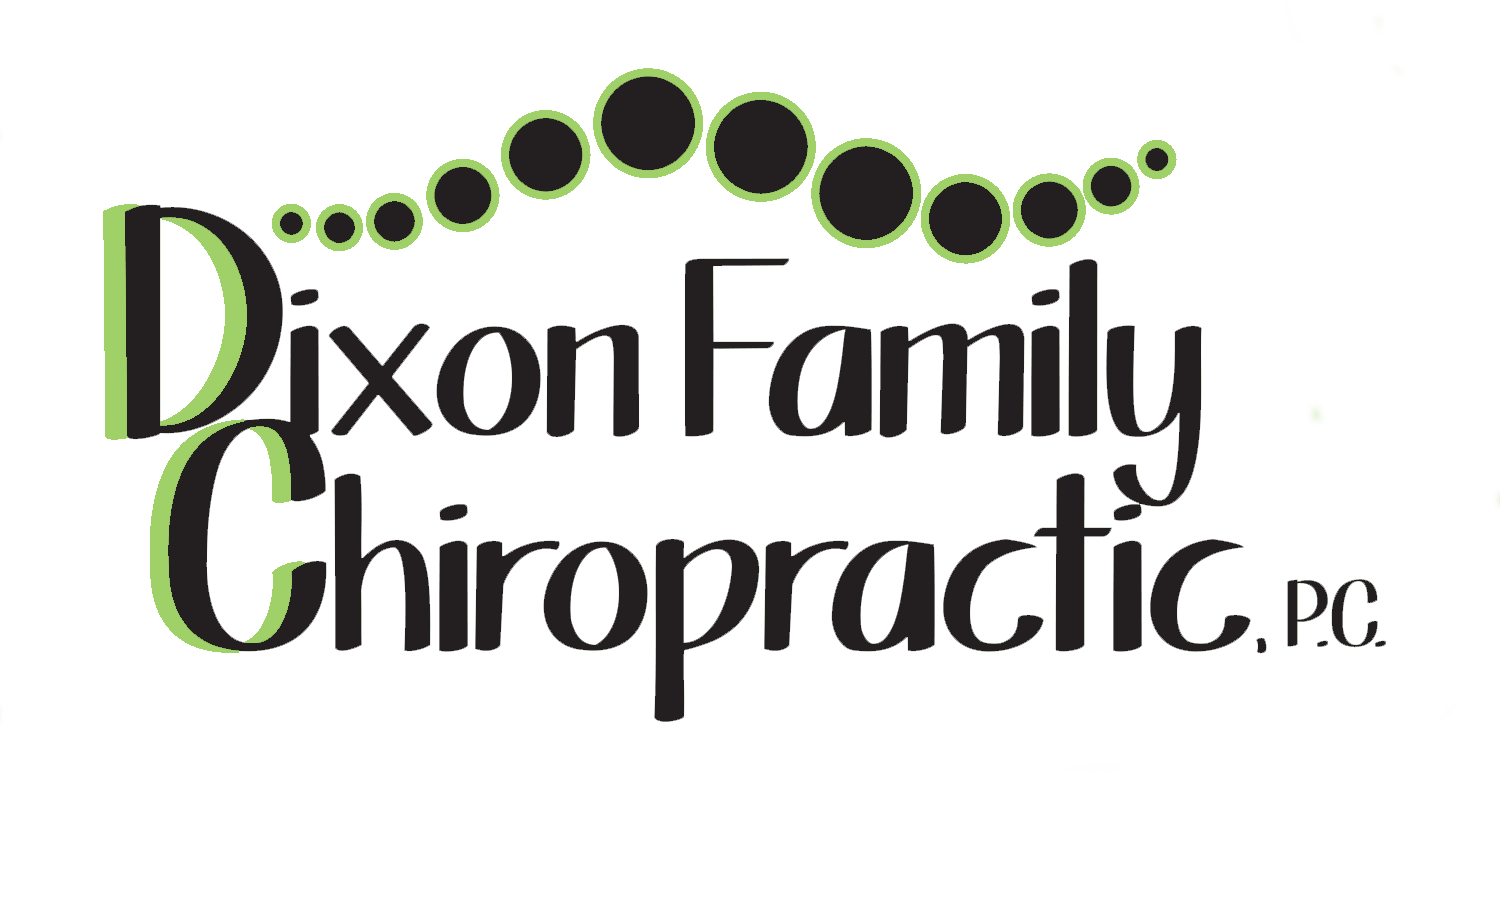 Dixon Family Chiropractic